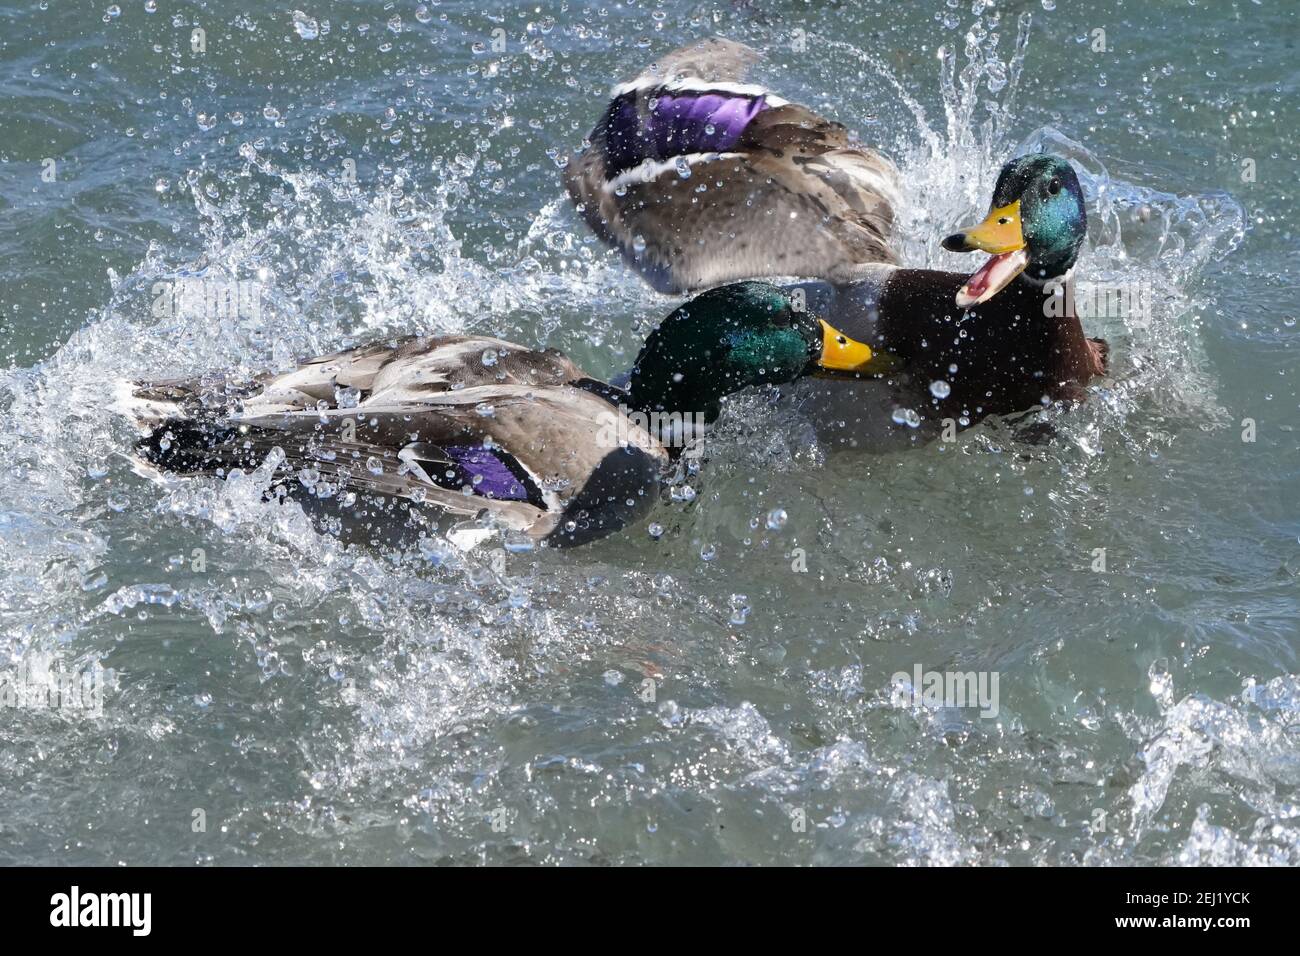 Luchando contra Mallard drakes en el agua, atacando de manera maliciosa Foto de stock